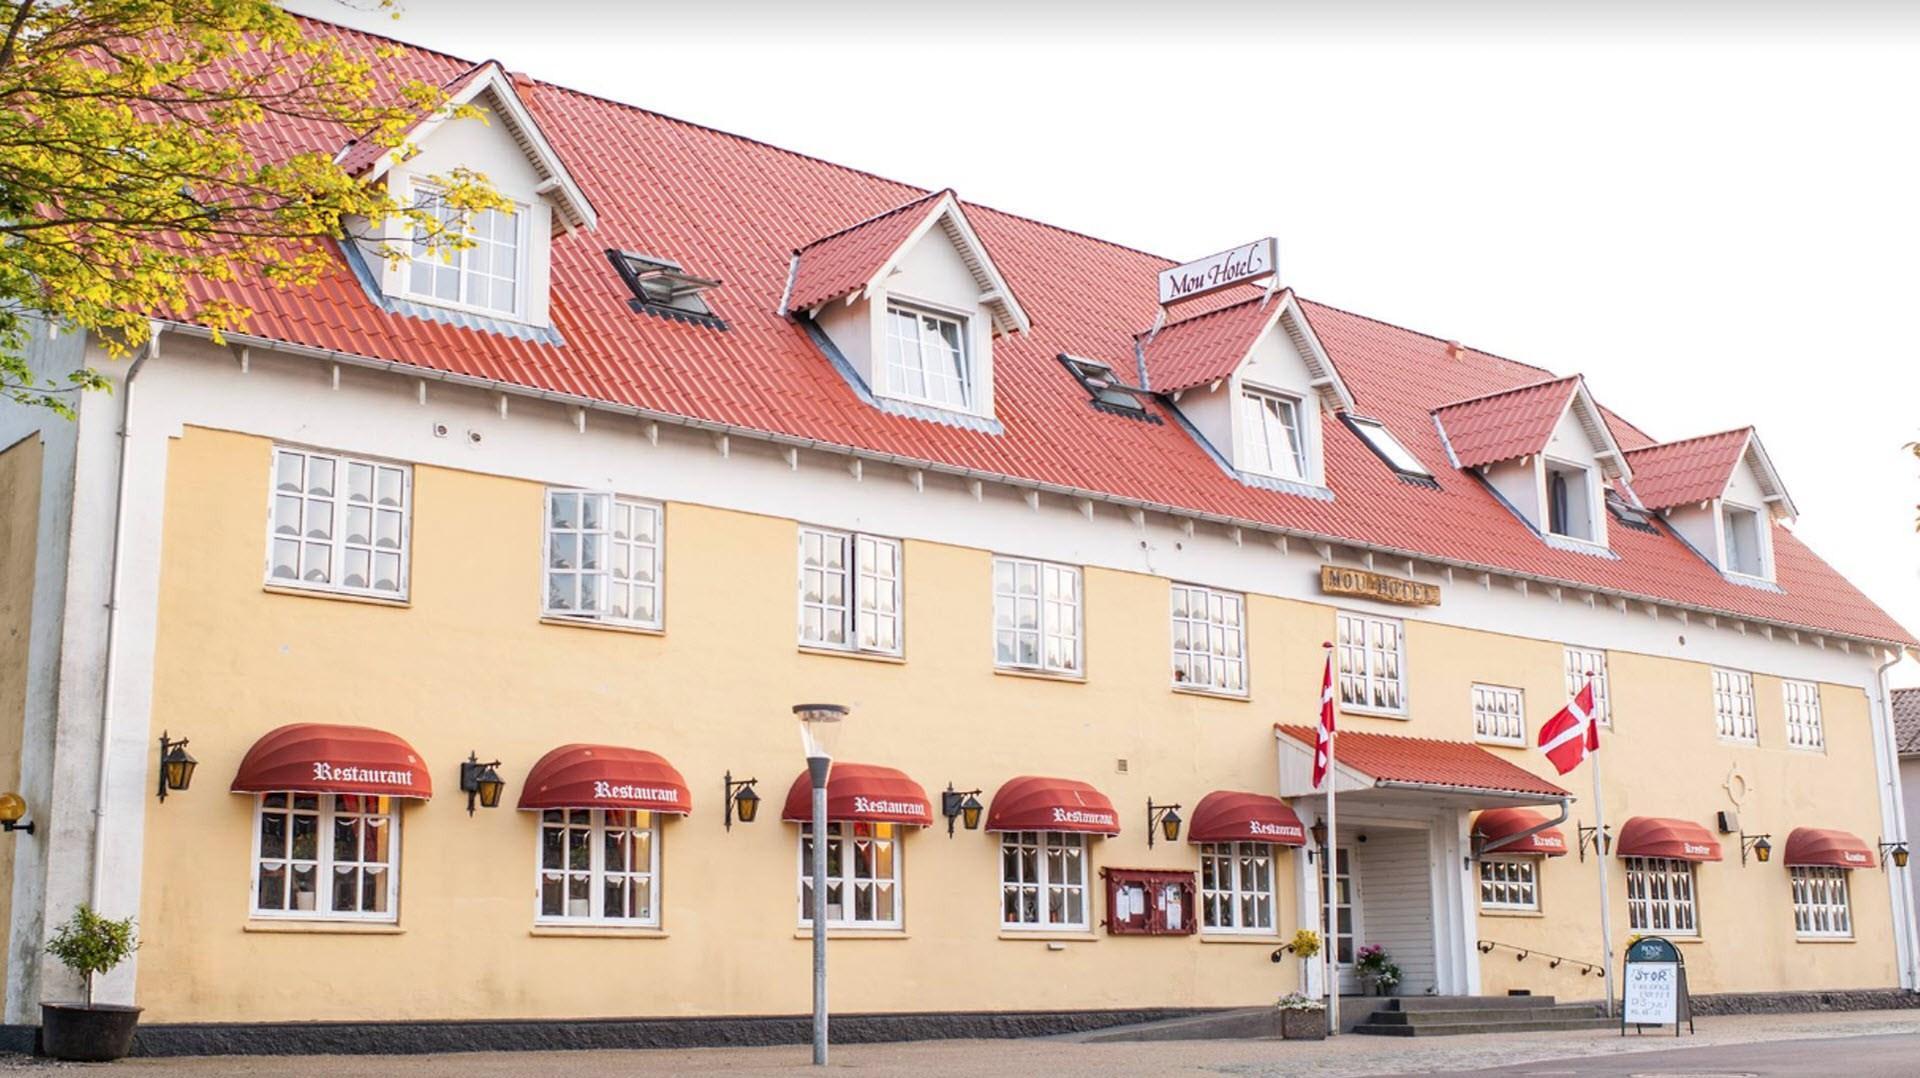 Mou Hotel in Storvorde, DK